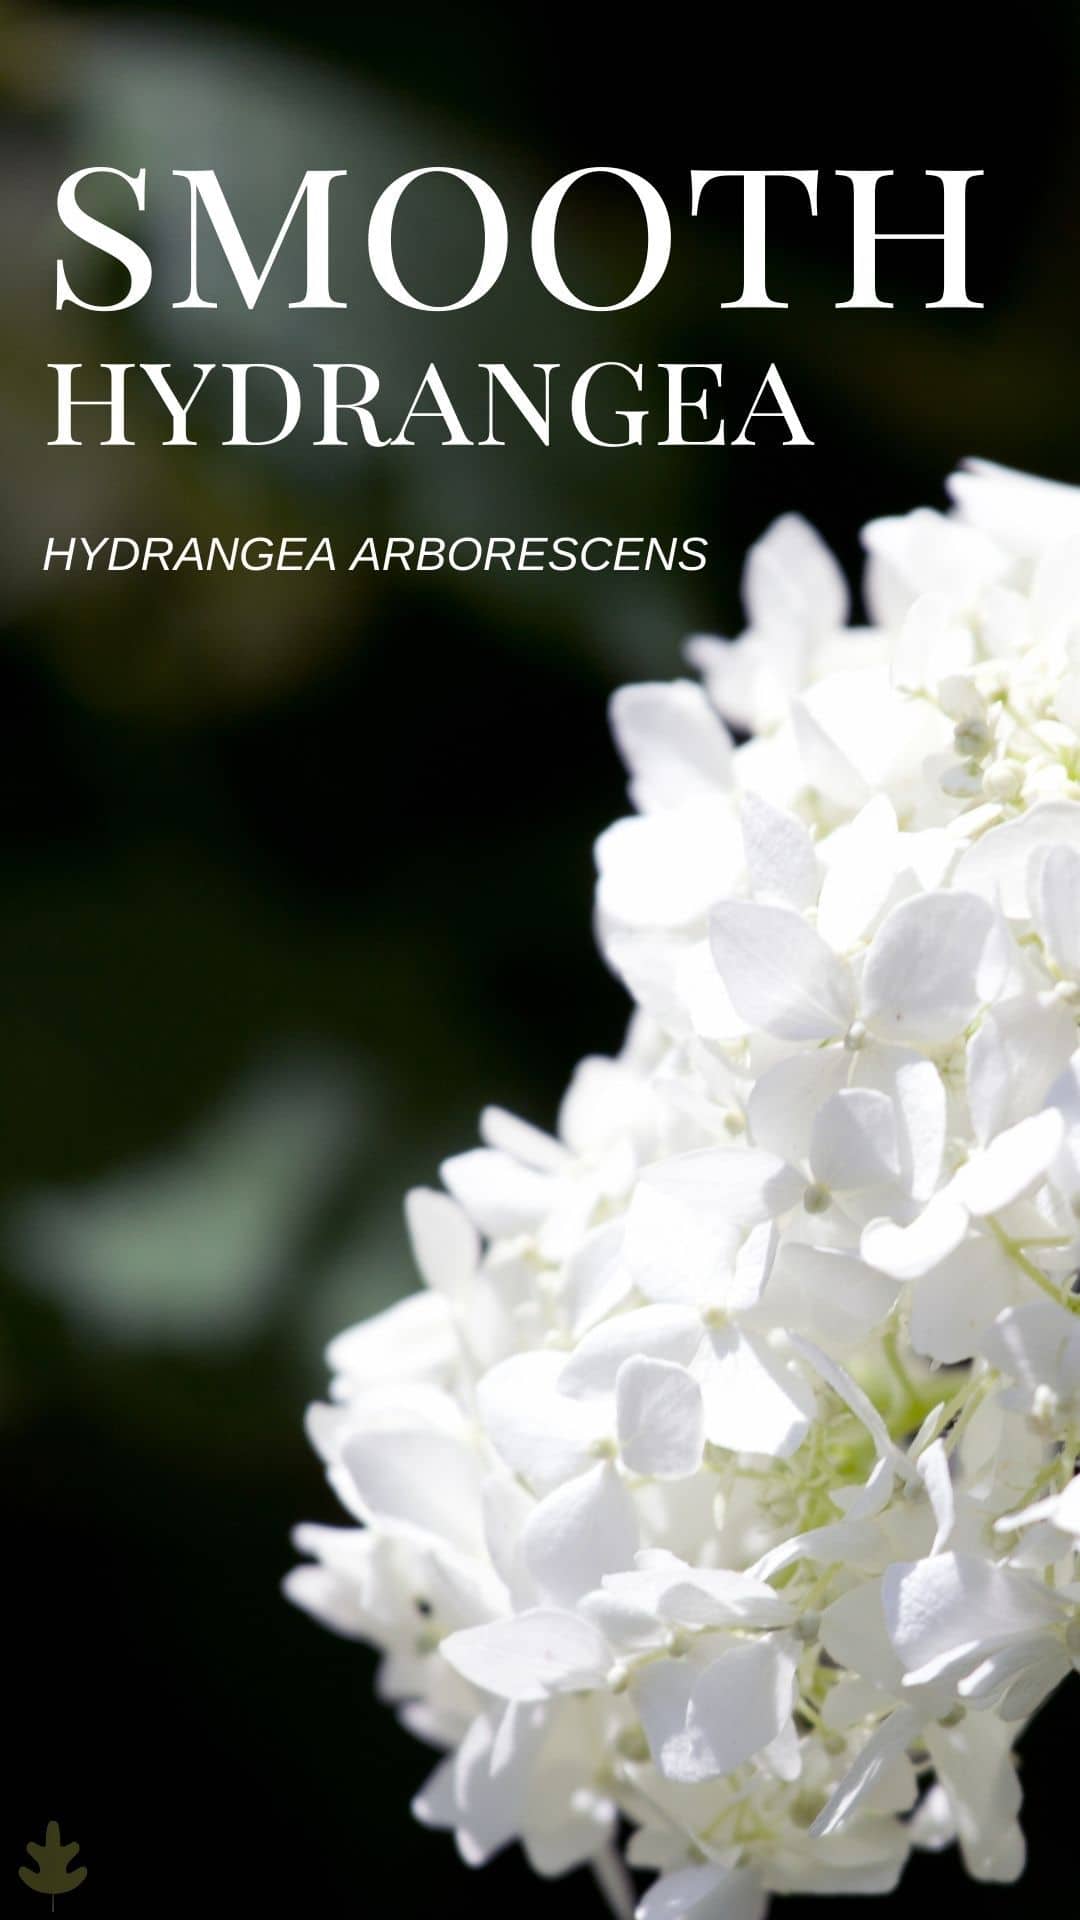 Hydrangea arborescens via @home4theharvest